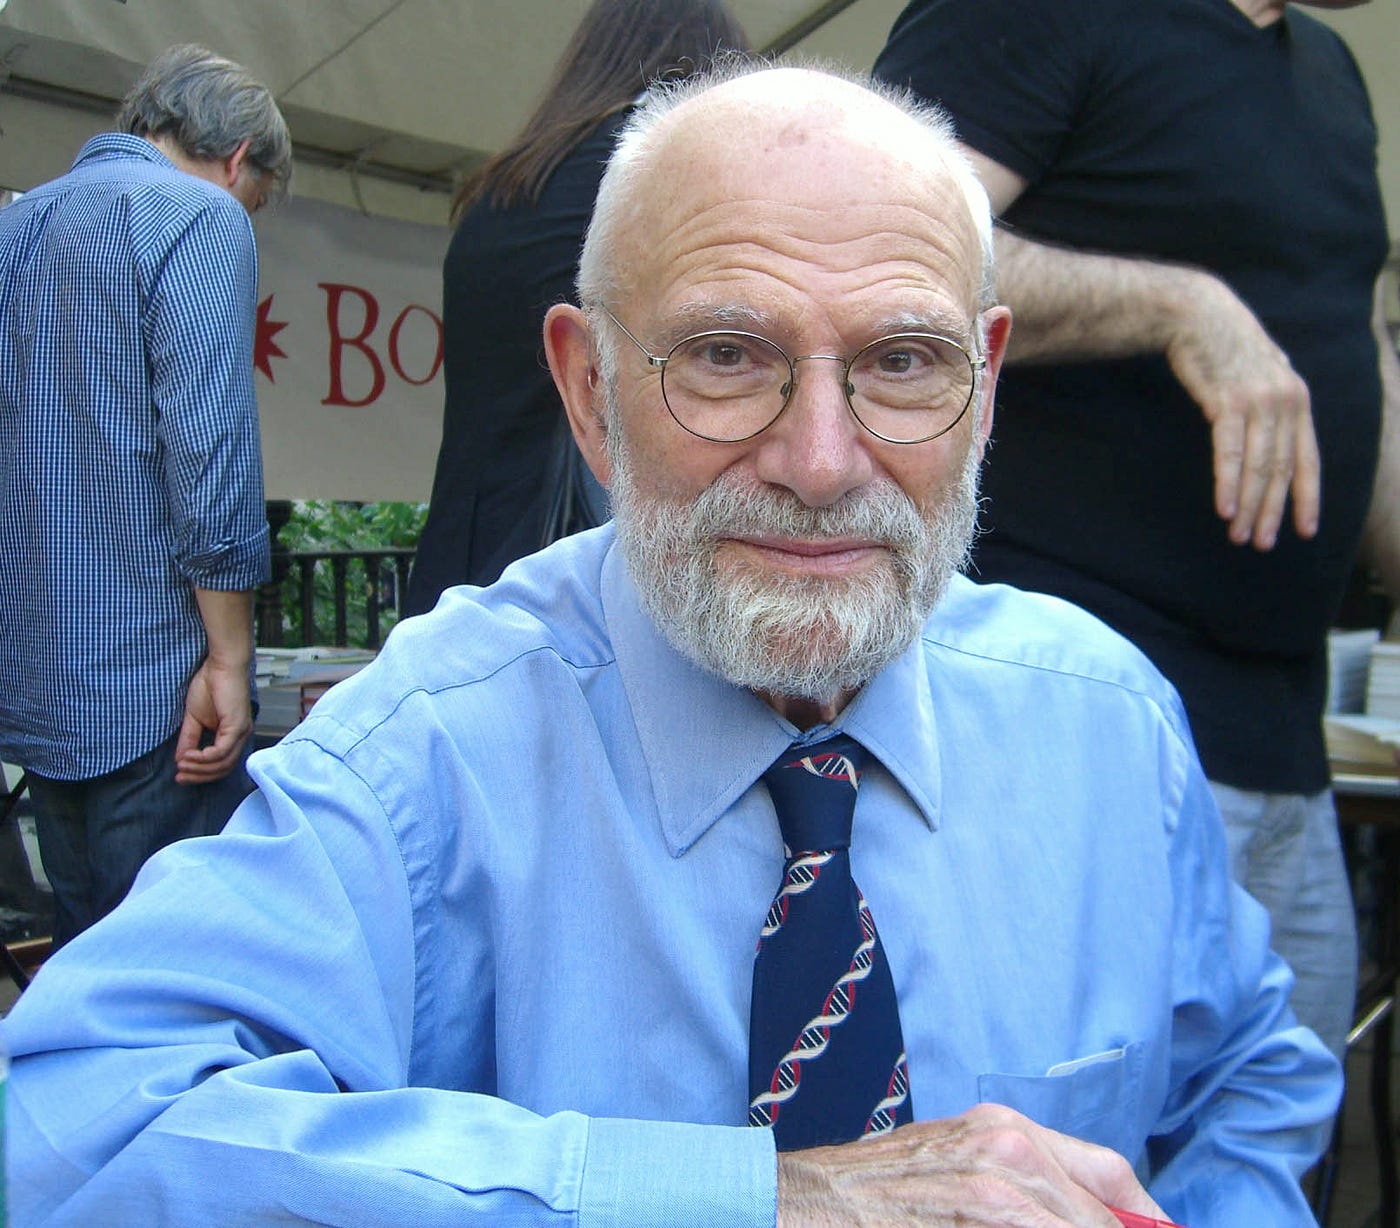 Oliver Sacks's legacy